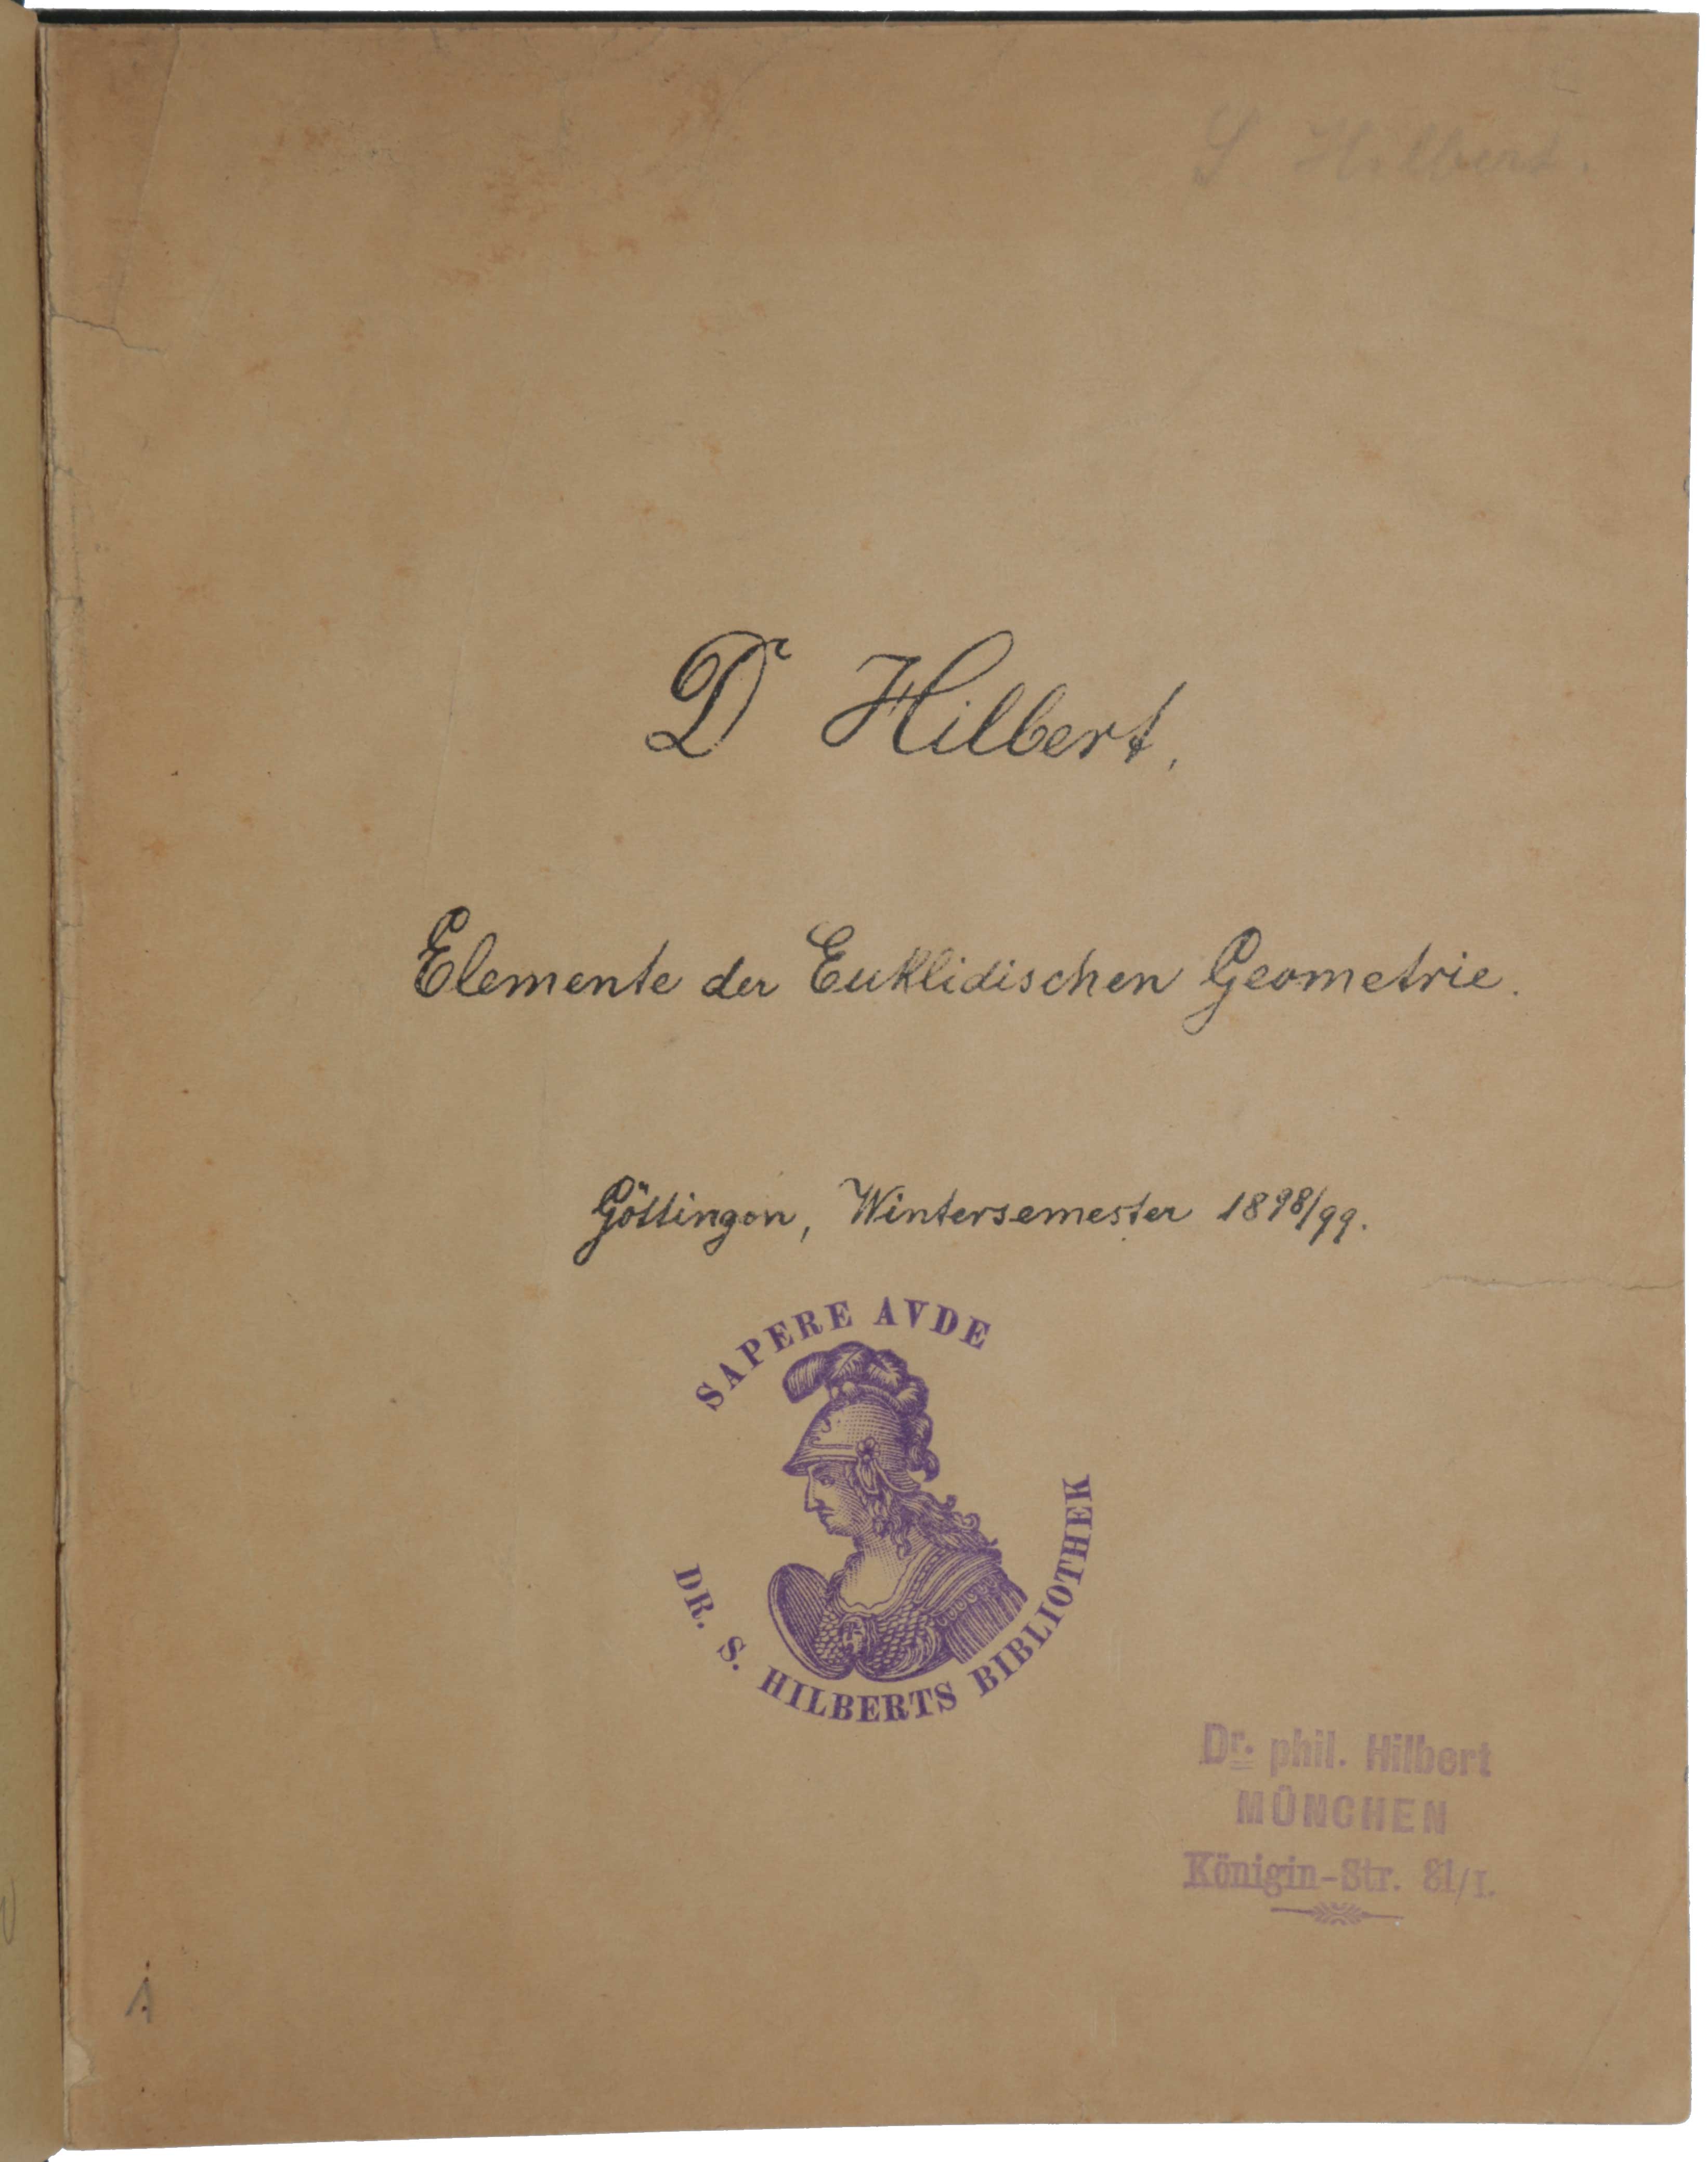 Item #6076 Elemente der Euklidischen Geometrie. Göttingen, Wintersemester 1898/99. Mechanically reproduced manuscript in a professional copyist’s hand. David HILBERT.